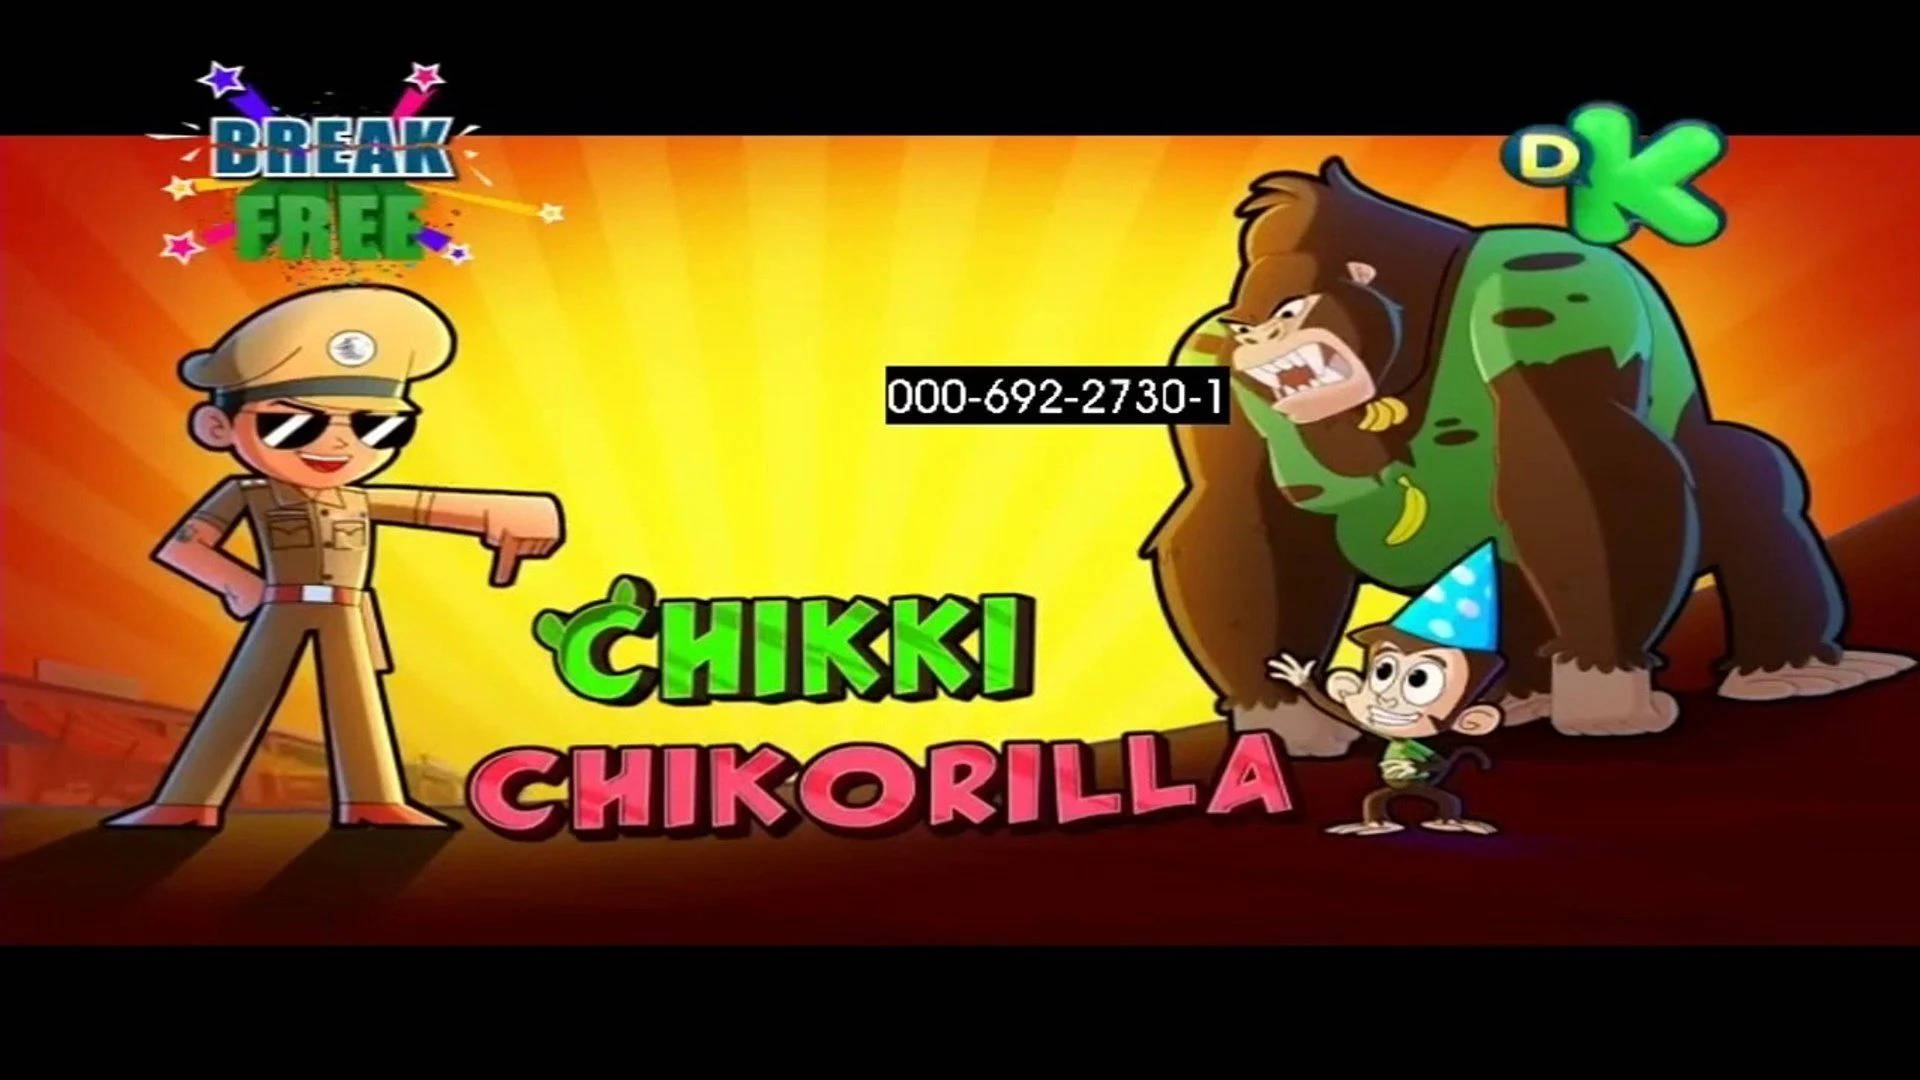 Little Singham And Chikki With A Gorilla